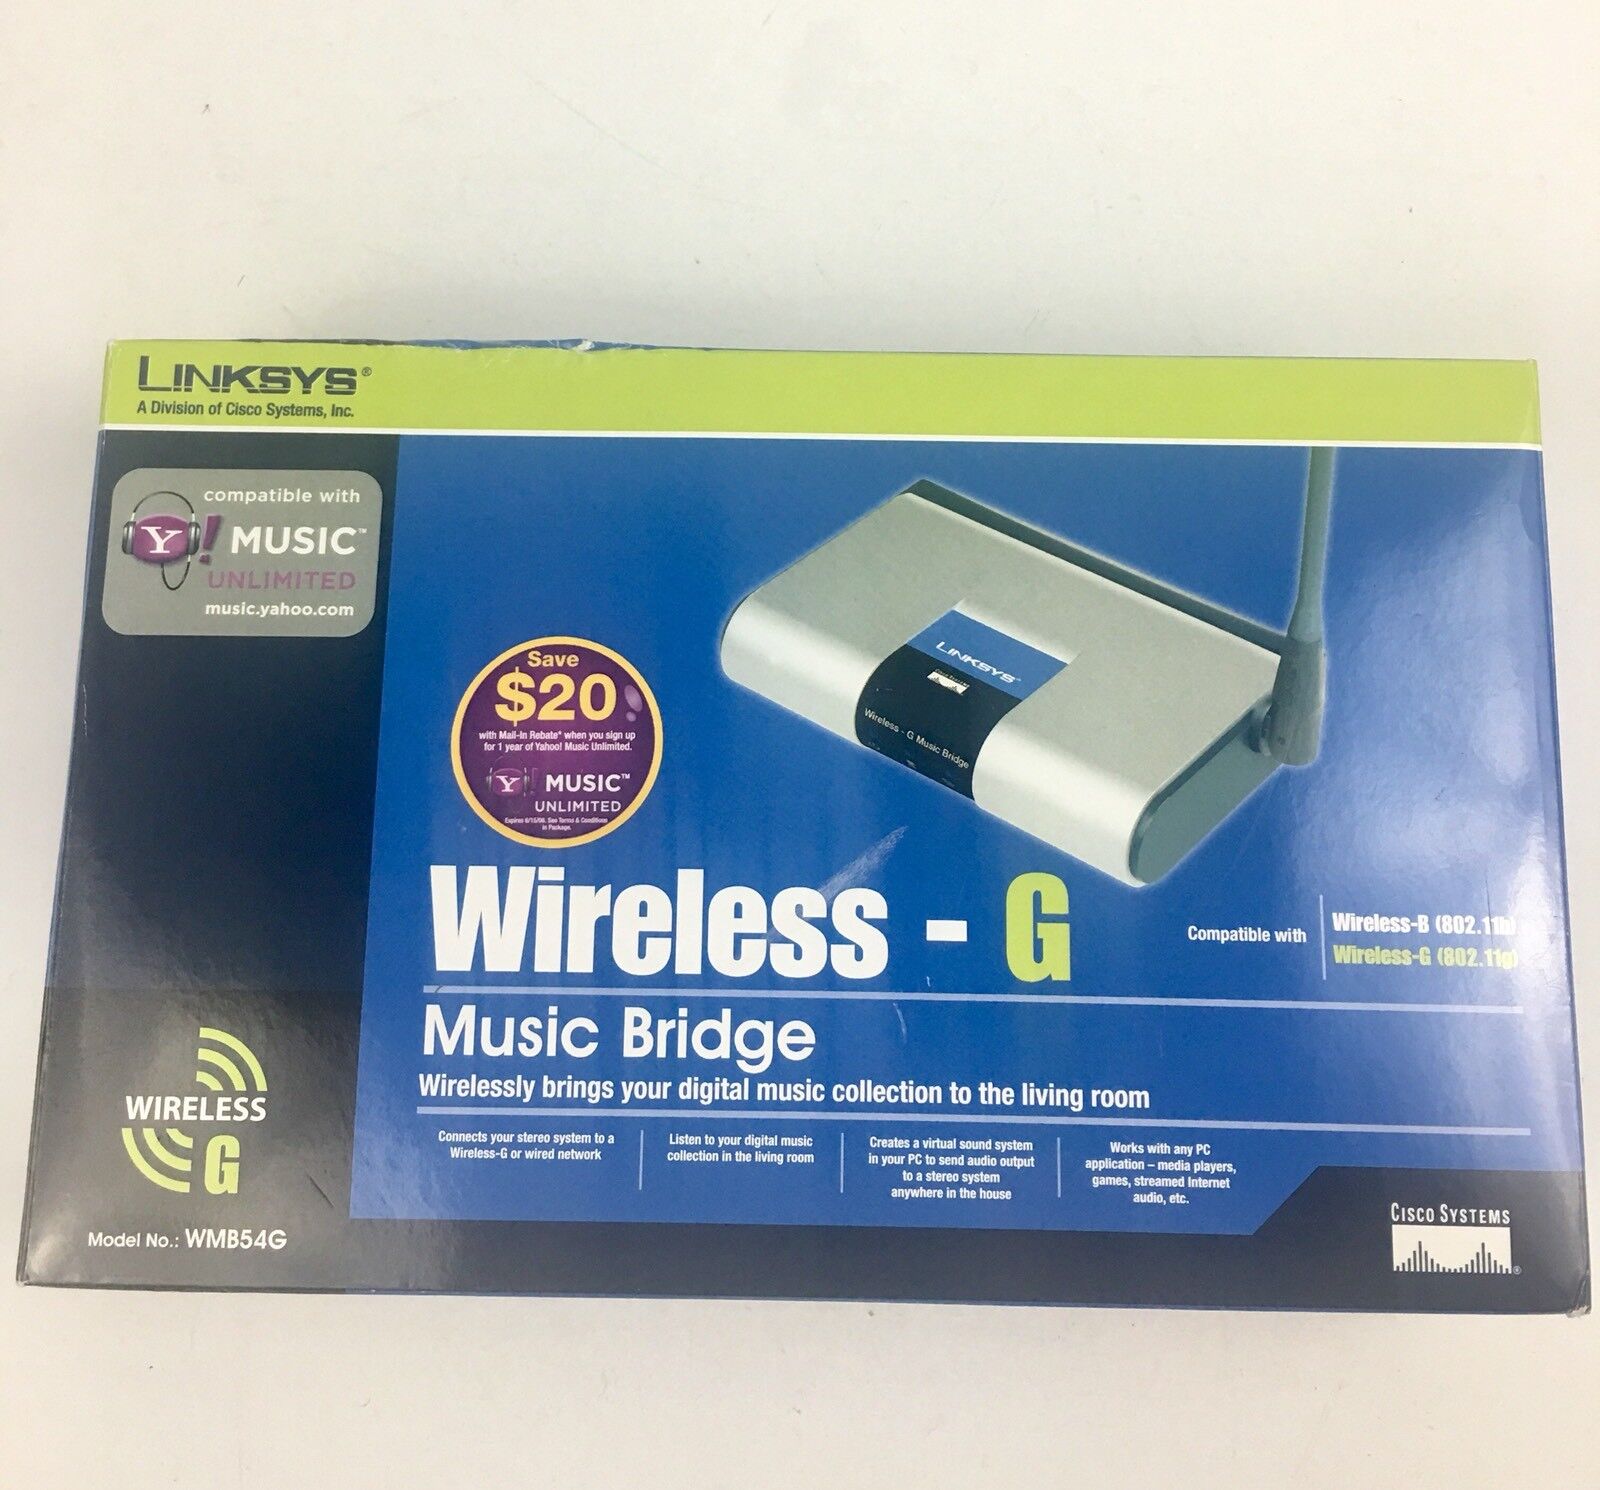 Linksys Wireless-G Wireless Bridge made Cisco Systens WMB54G- Brand new open box